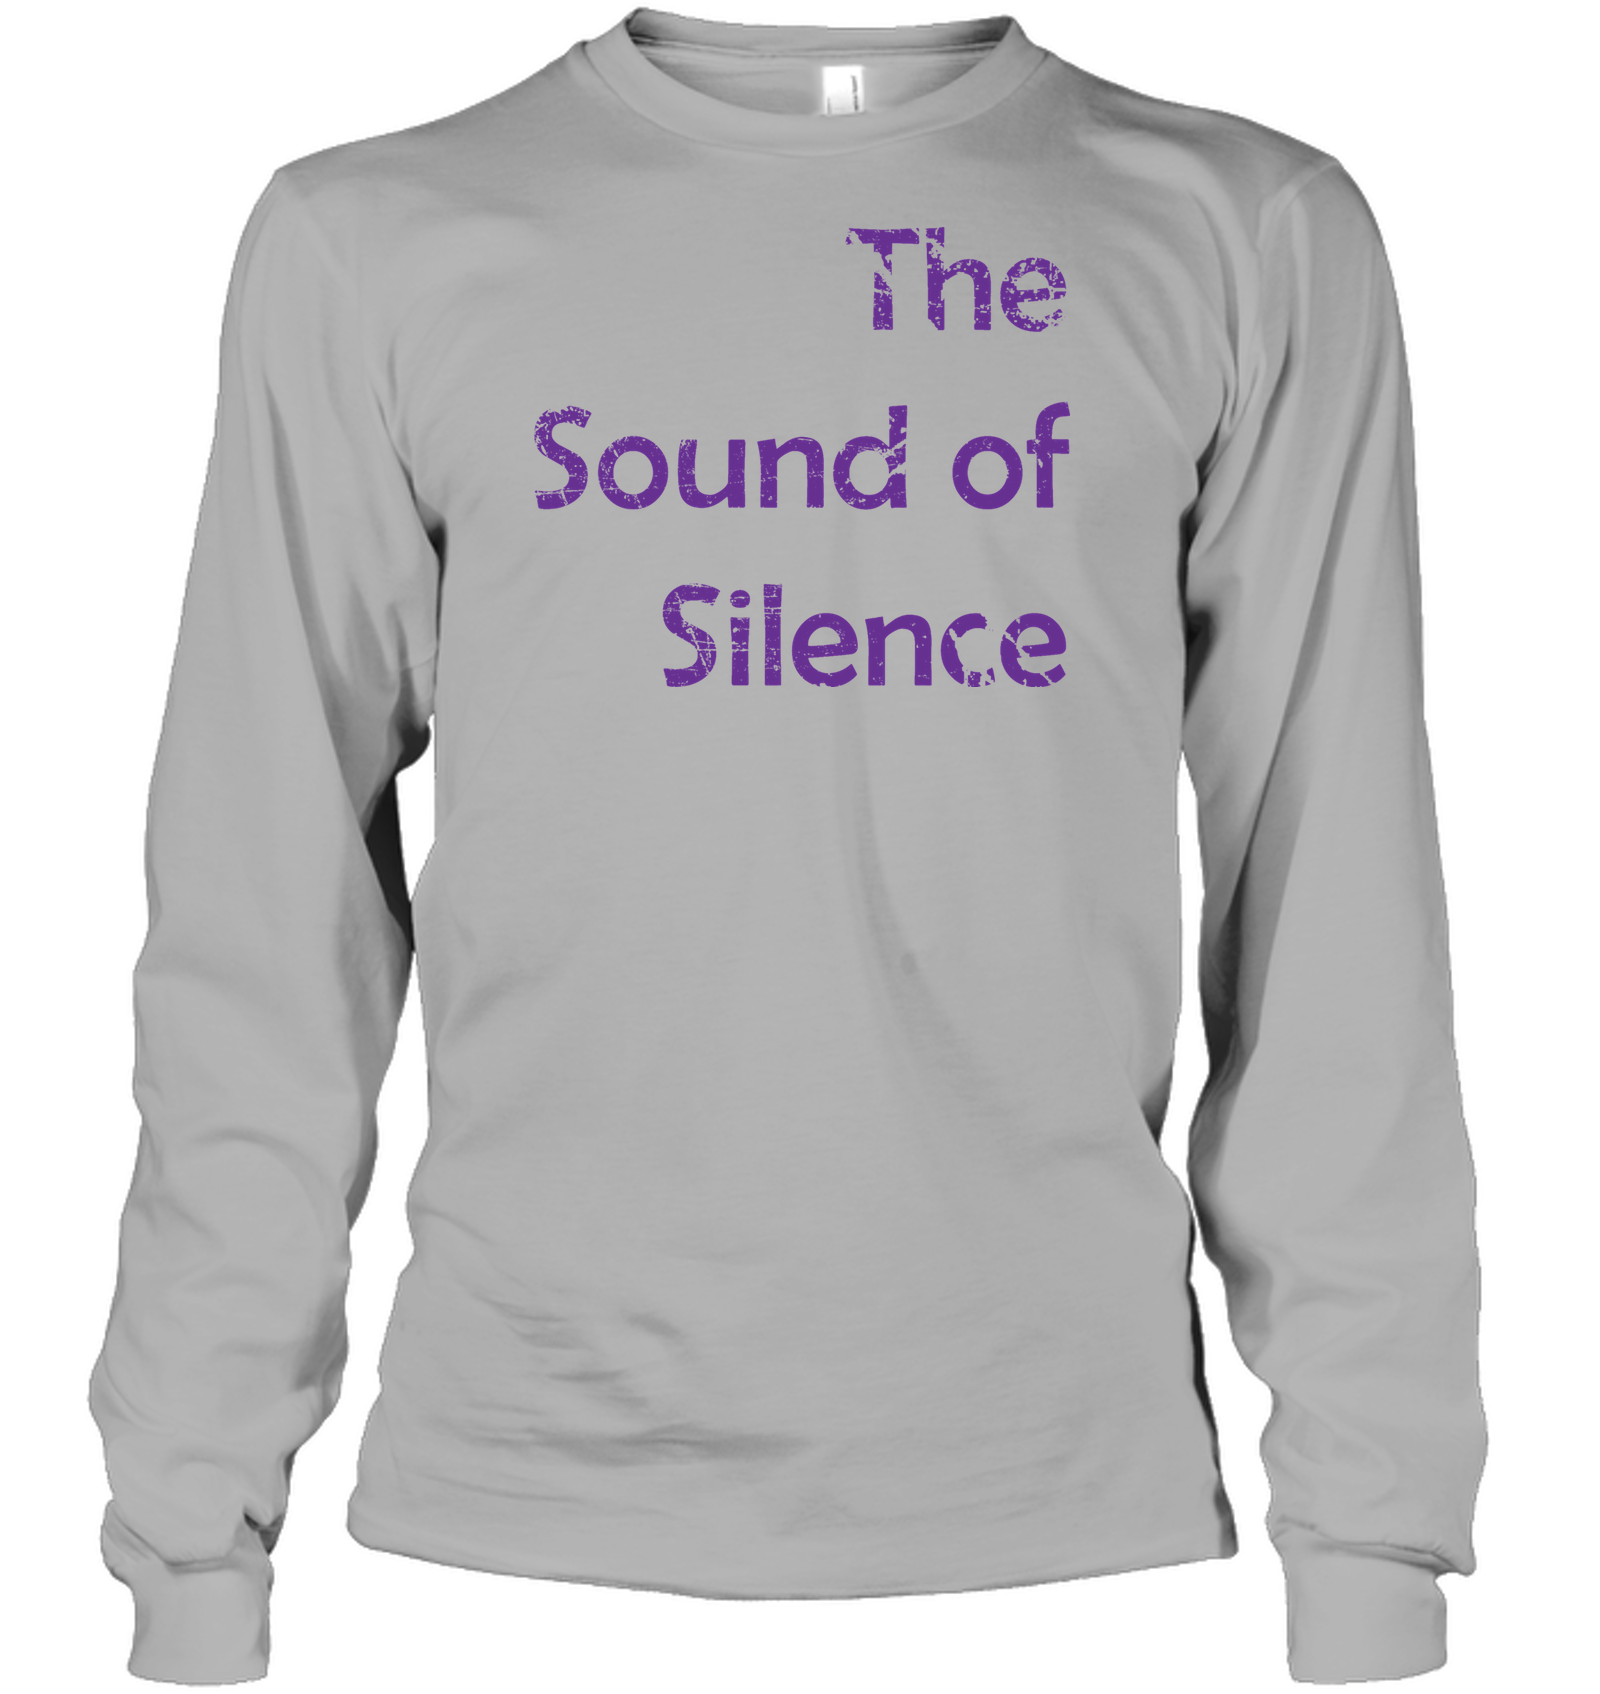 The Sound of Silence - Gildan Adult Classic Long Sleeve T-Shirt